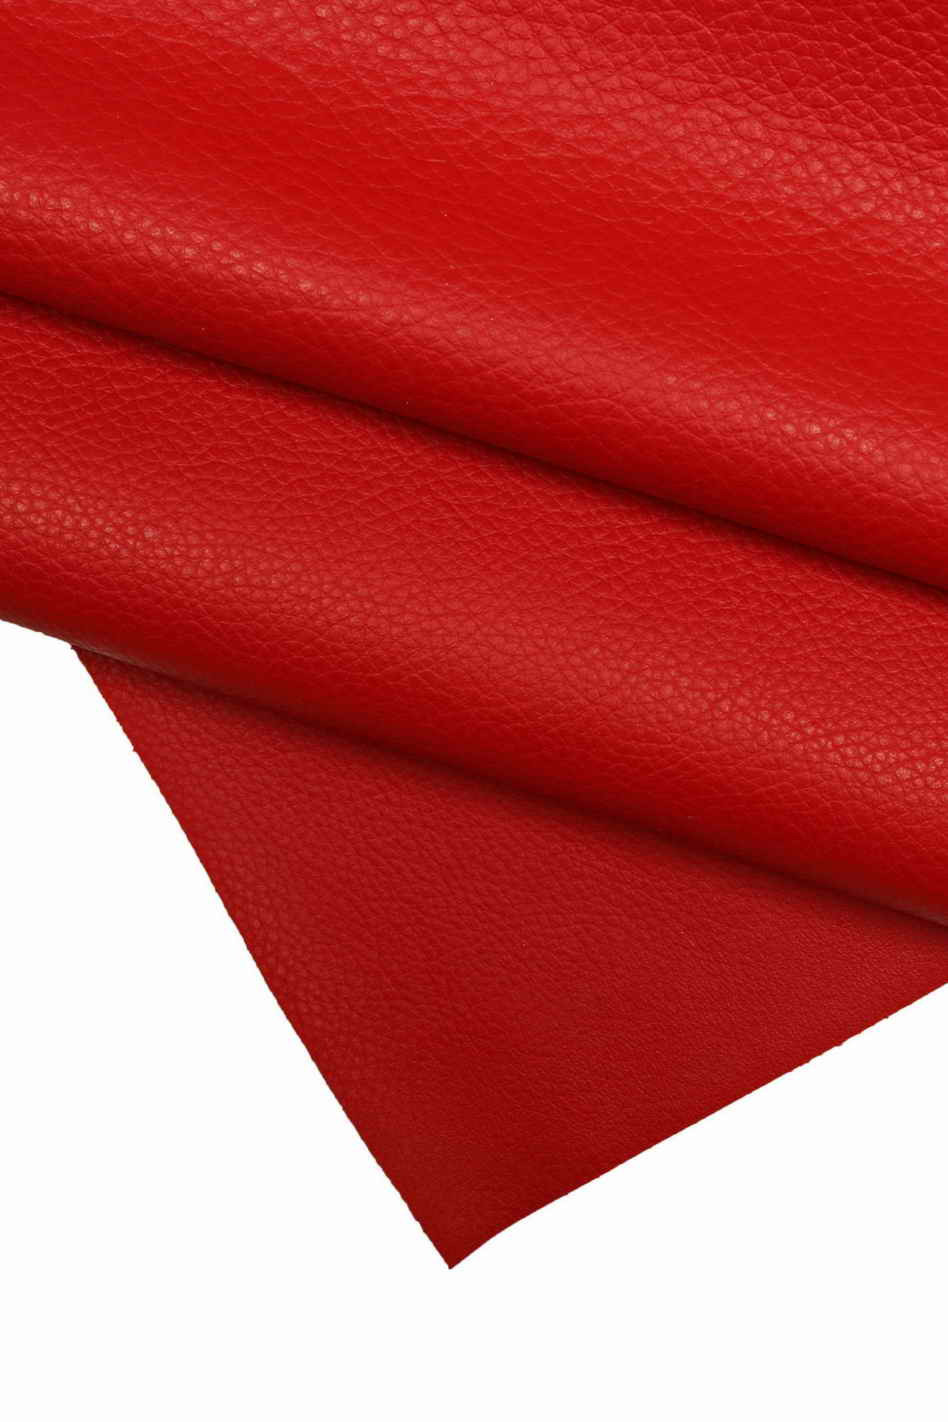 Genuine leather hide RED CALFSKIN pebble grain print cowhide grainy calf  distressed soft italian skin